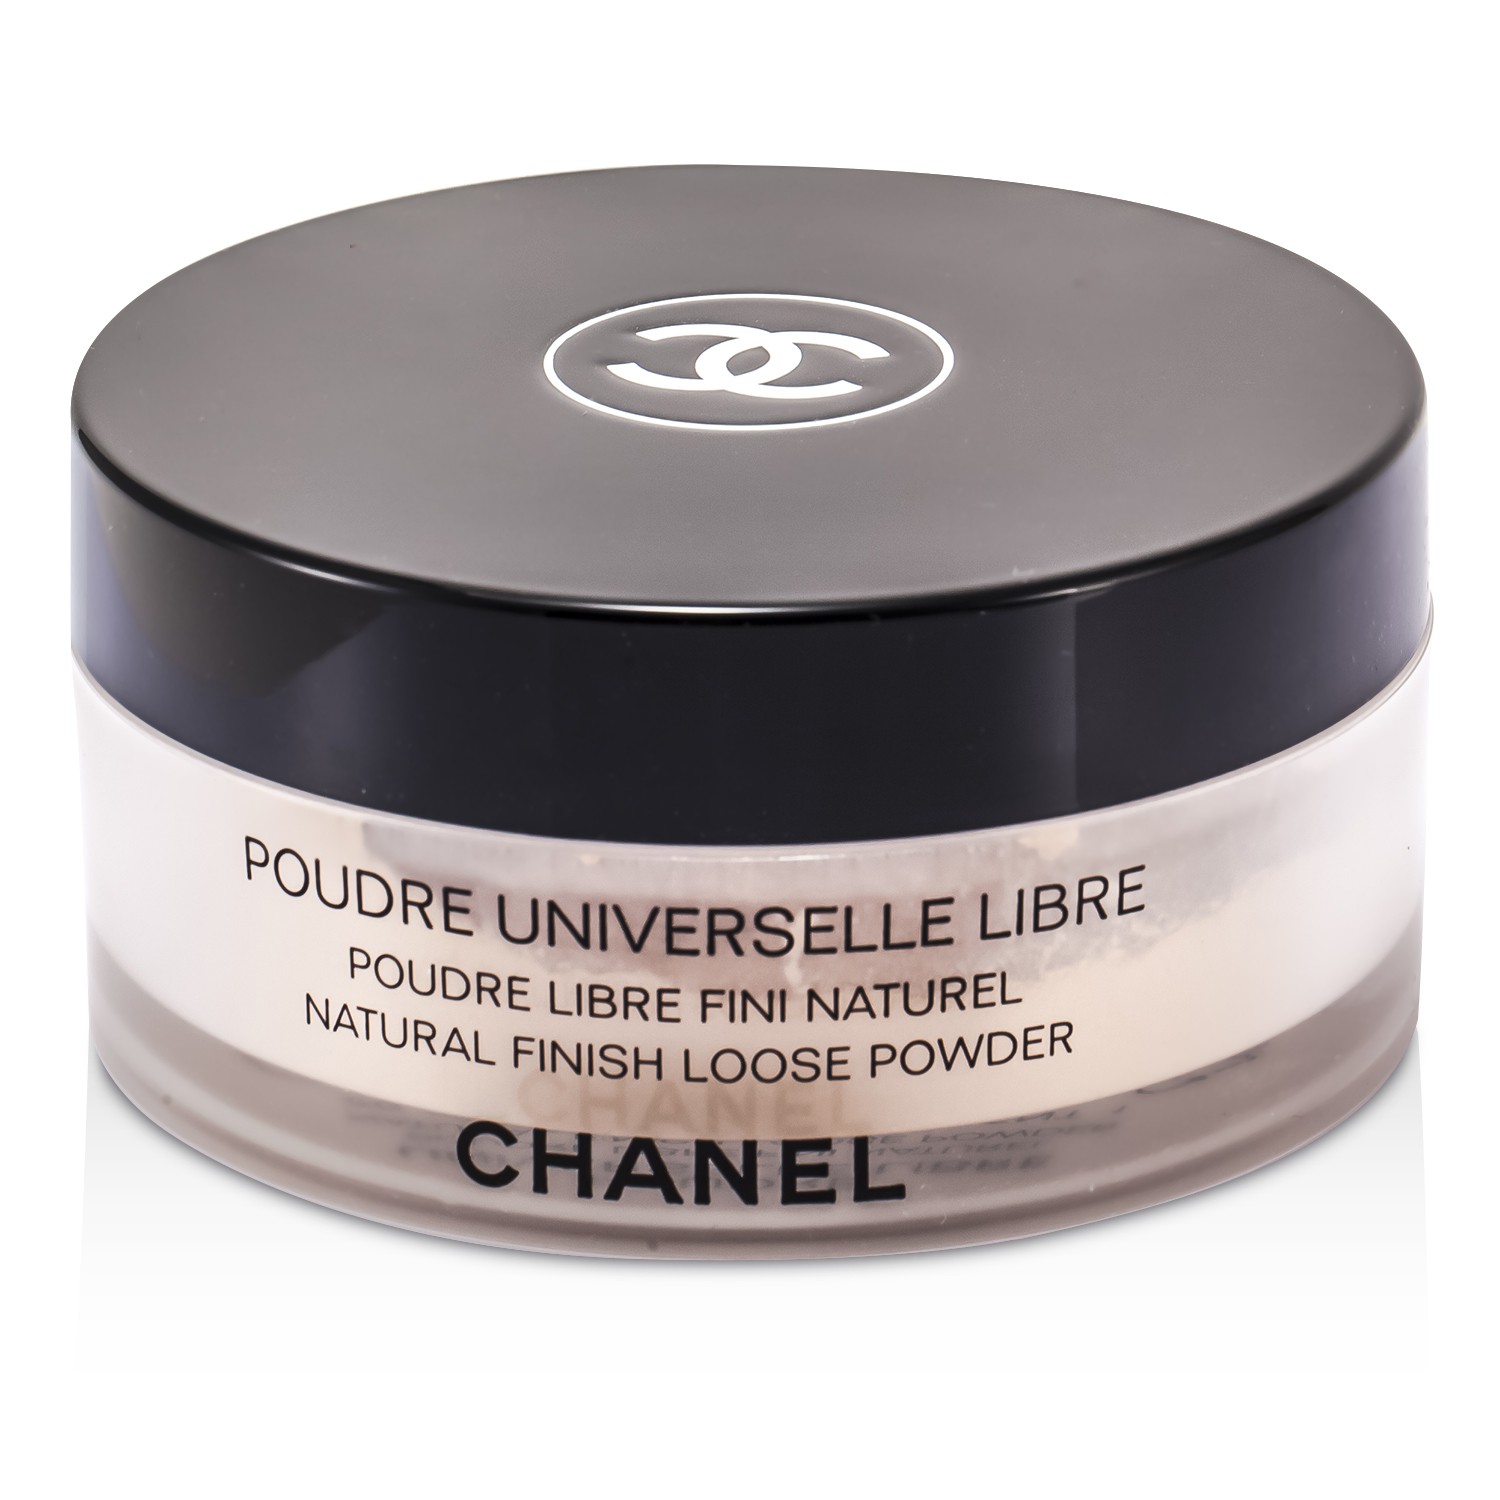 Chanel Poudre Universal Libre Poudre Libre Fini Naturel 20 Clair 30 g